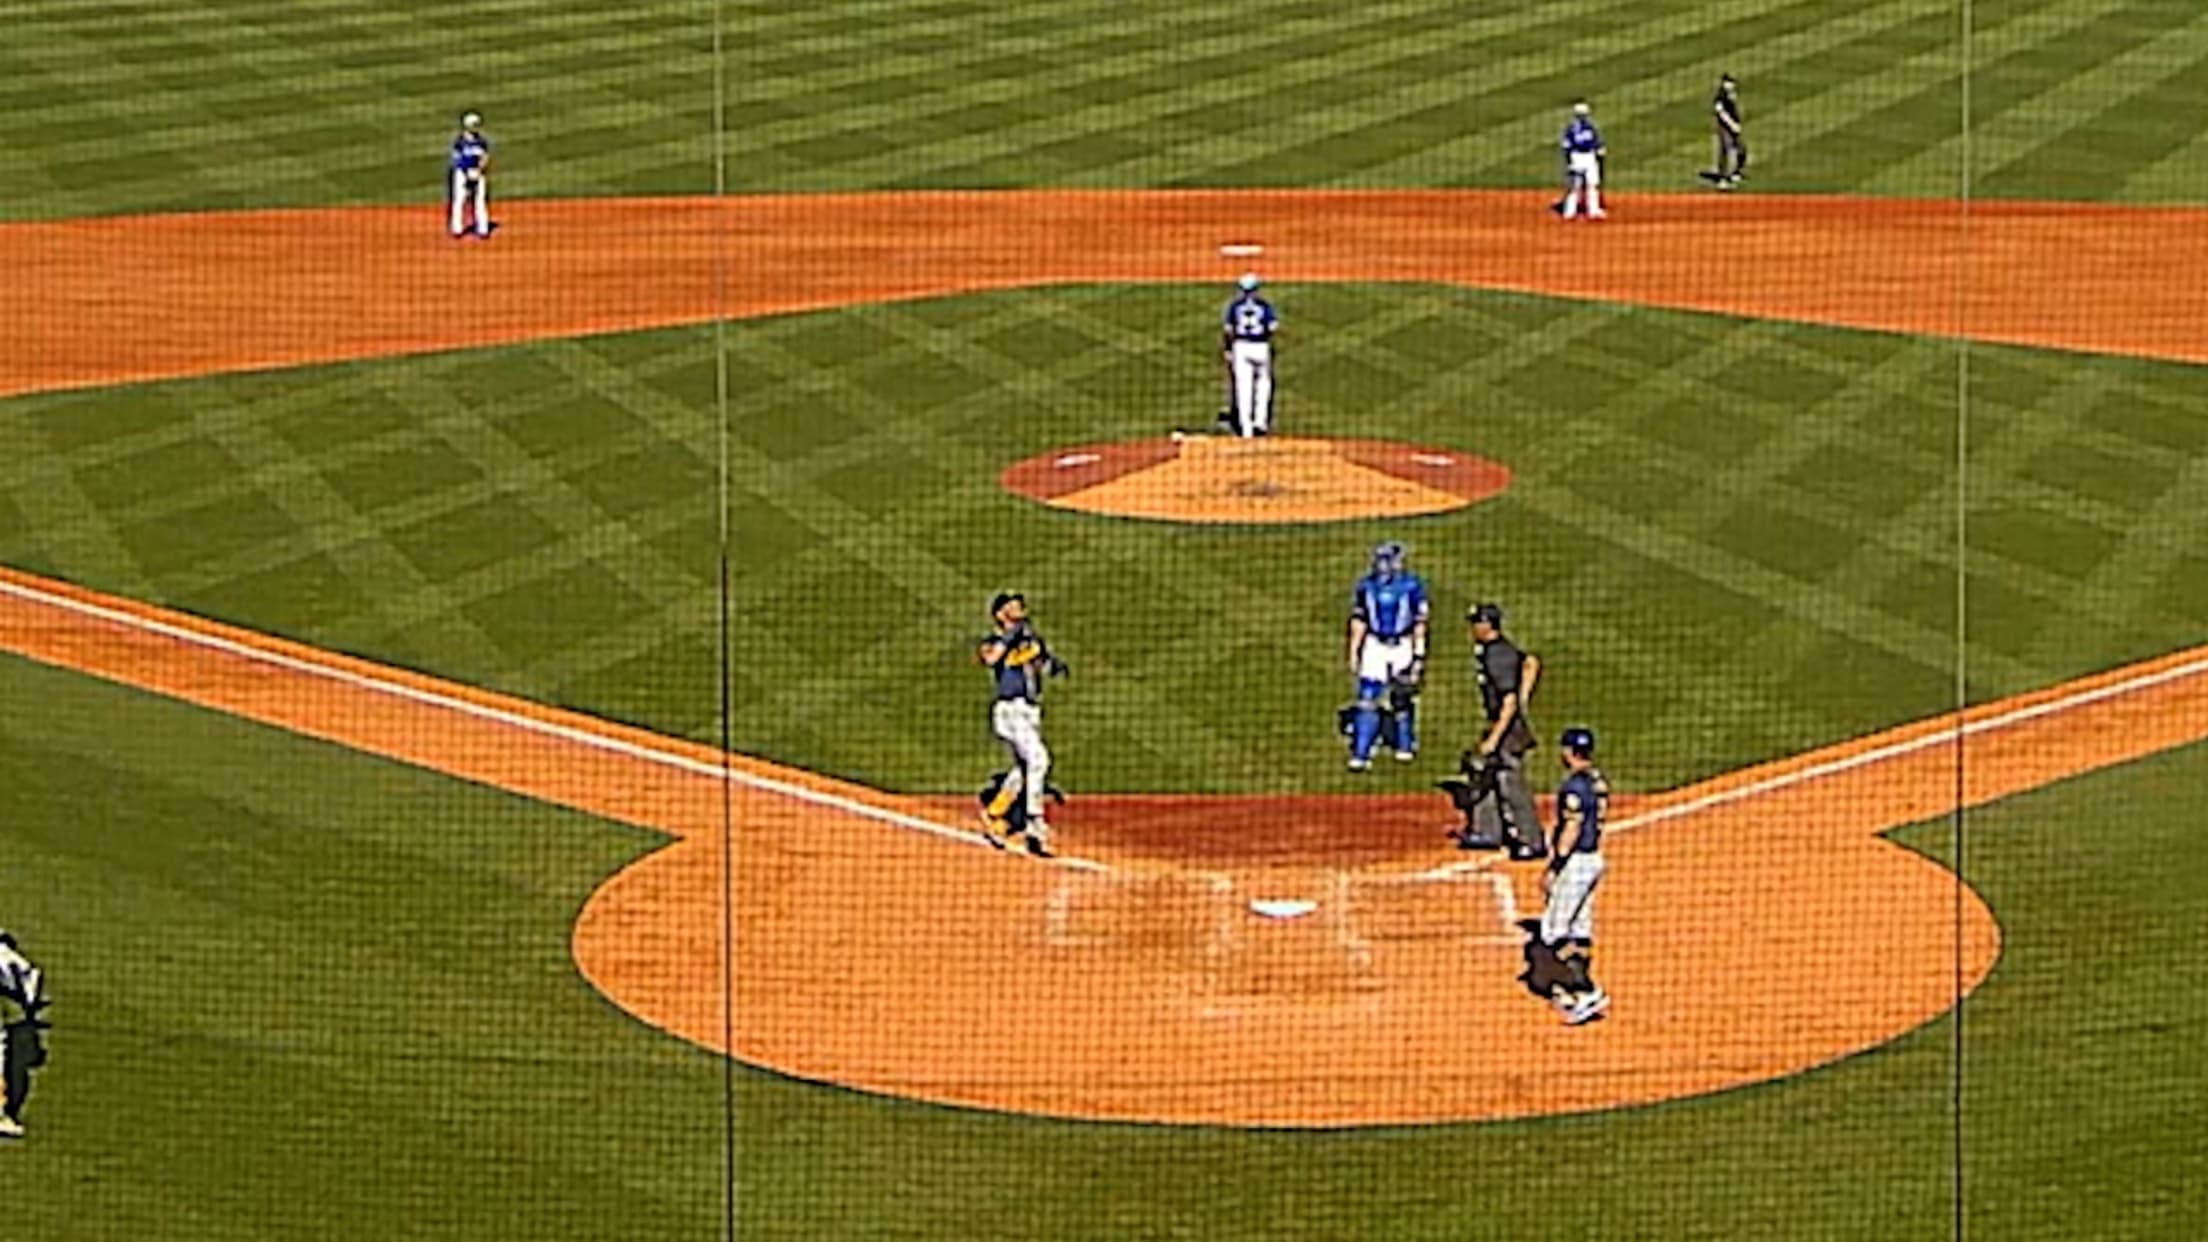 Joey Ortiz hits a two-run home run to left field